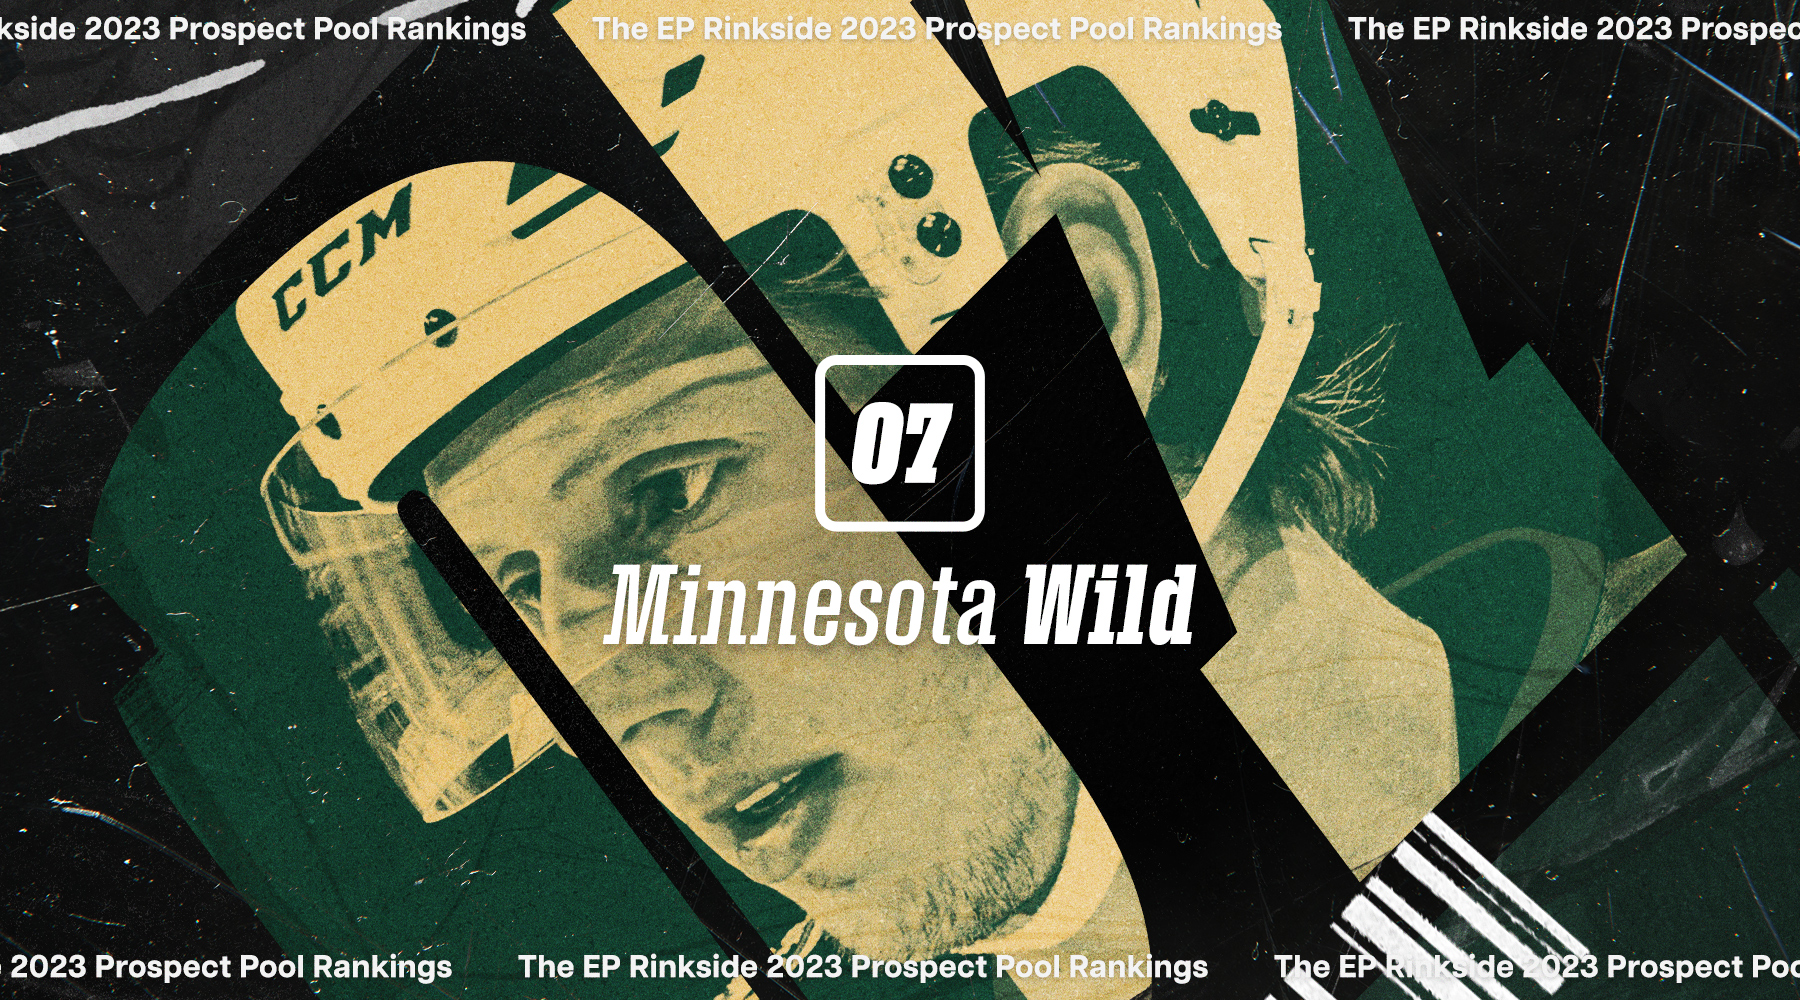 EP Rinkside 2023 NHL Prospect Pool Rankings: No. 7-ranked Minnesota Wild